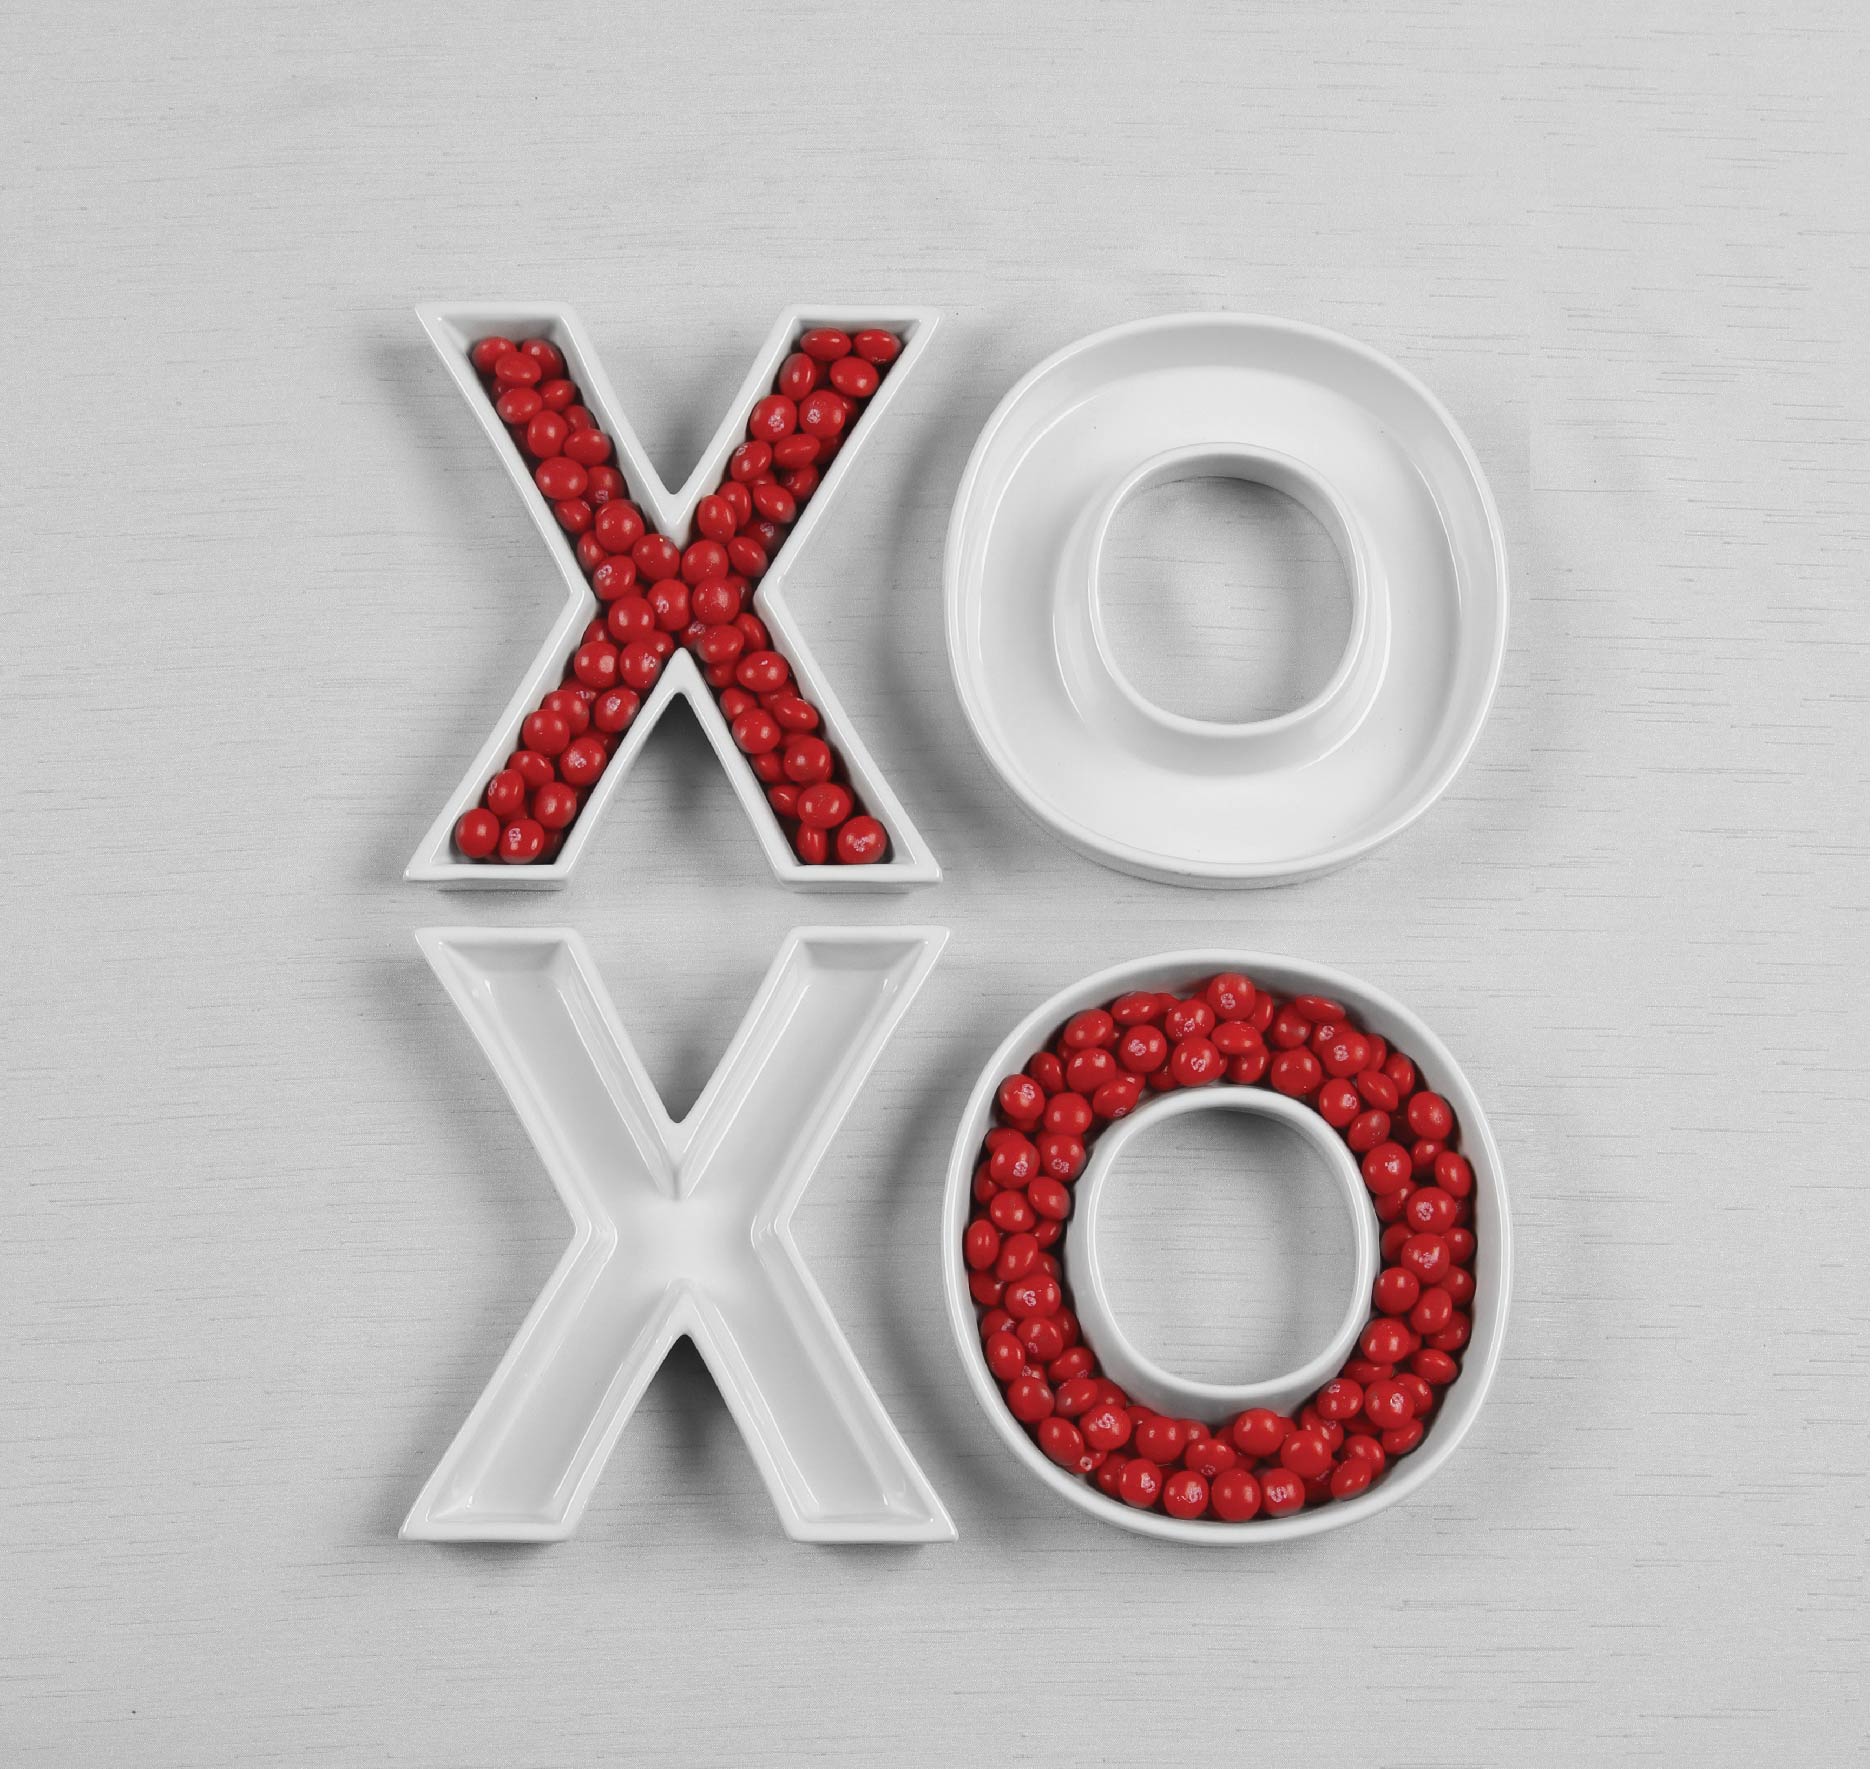 XOXO Ceramic Letter Dishes